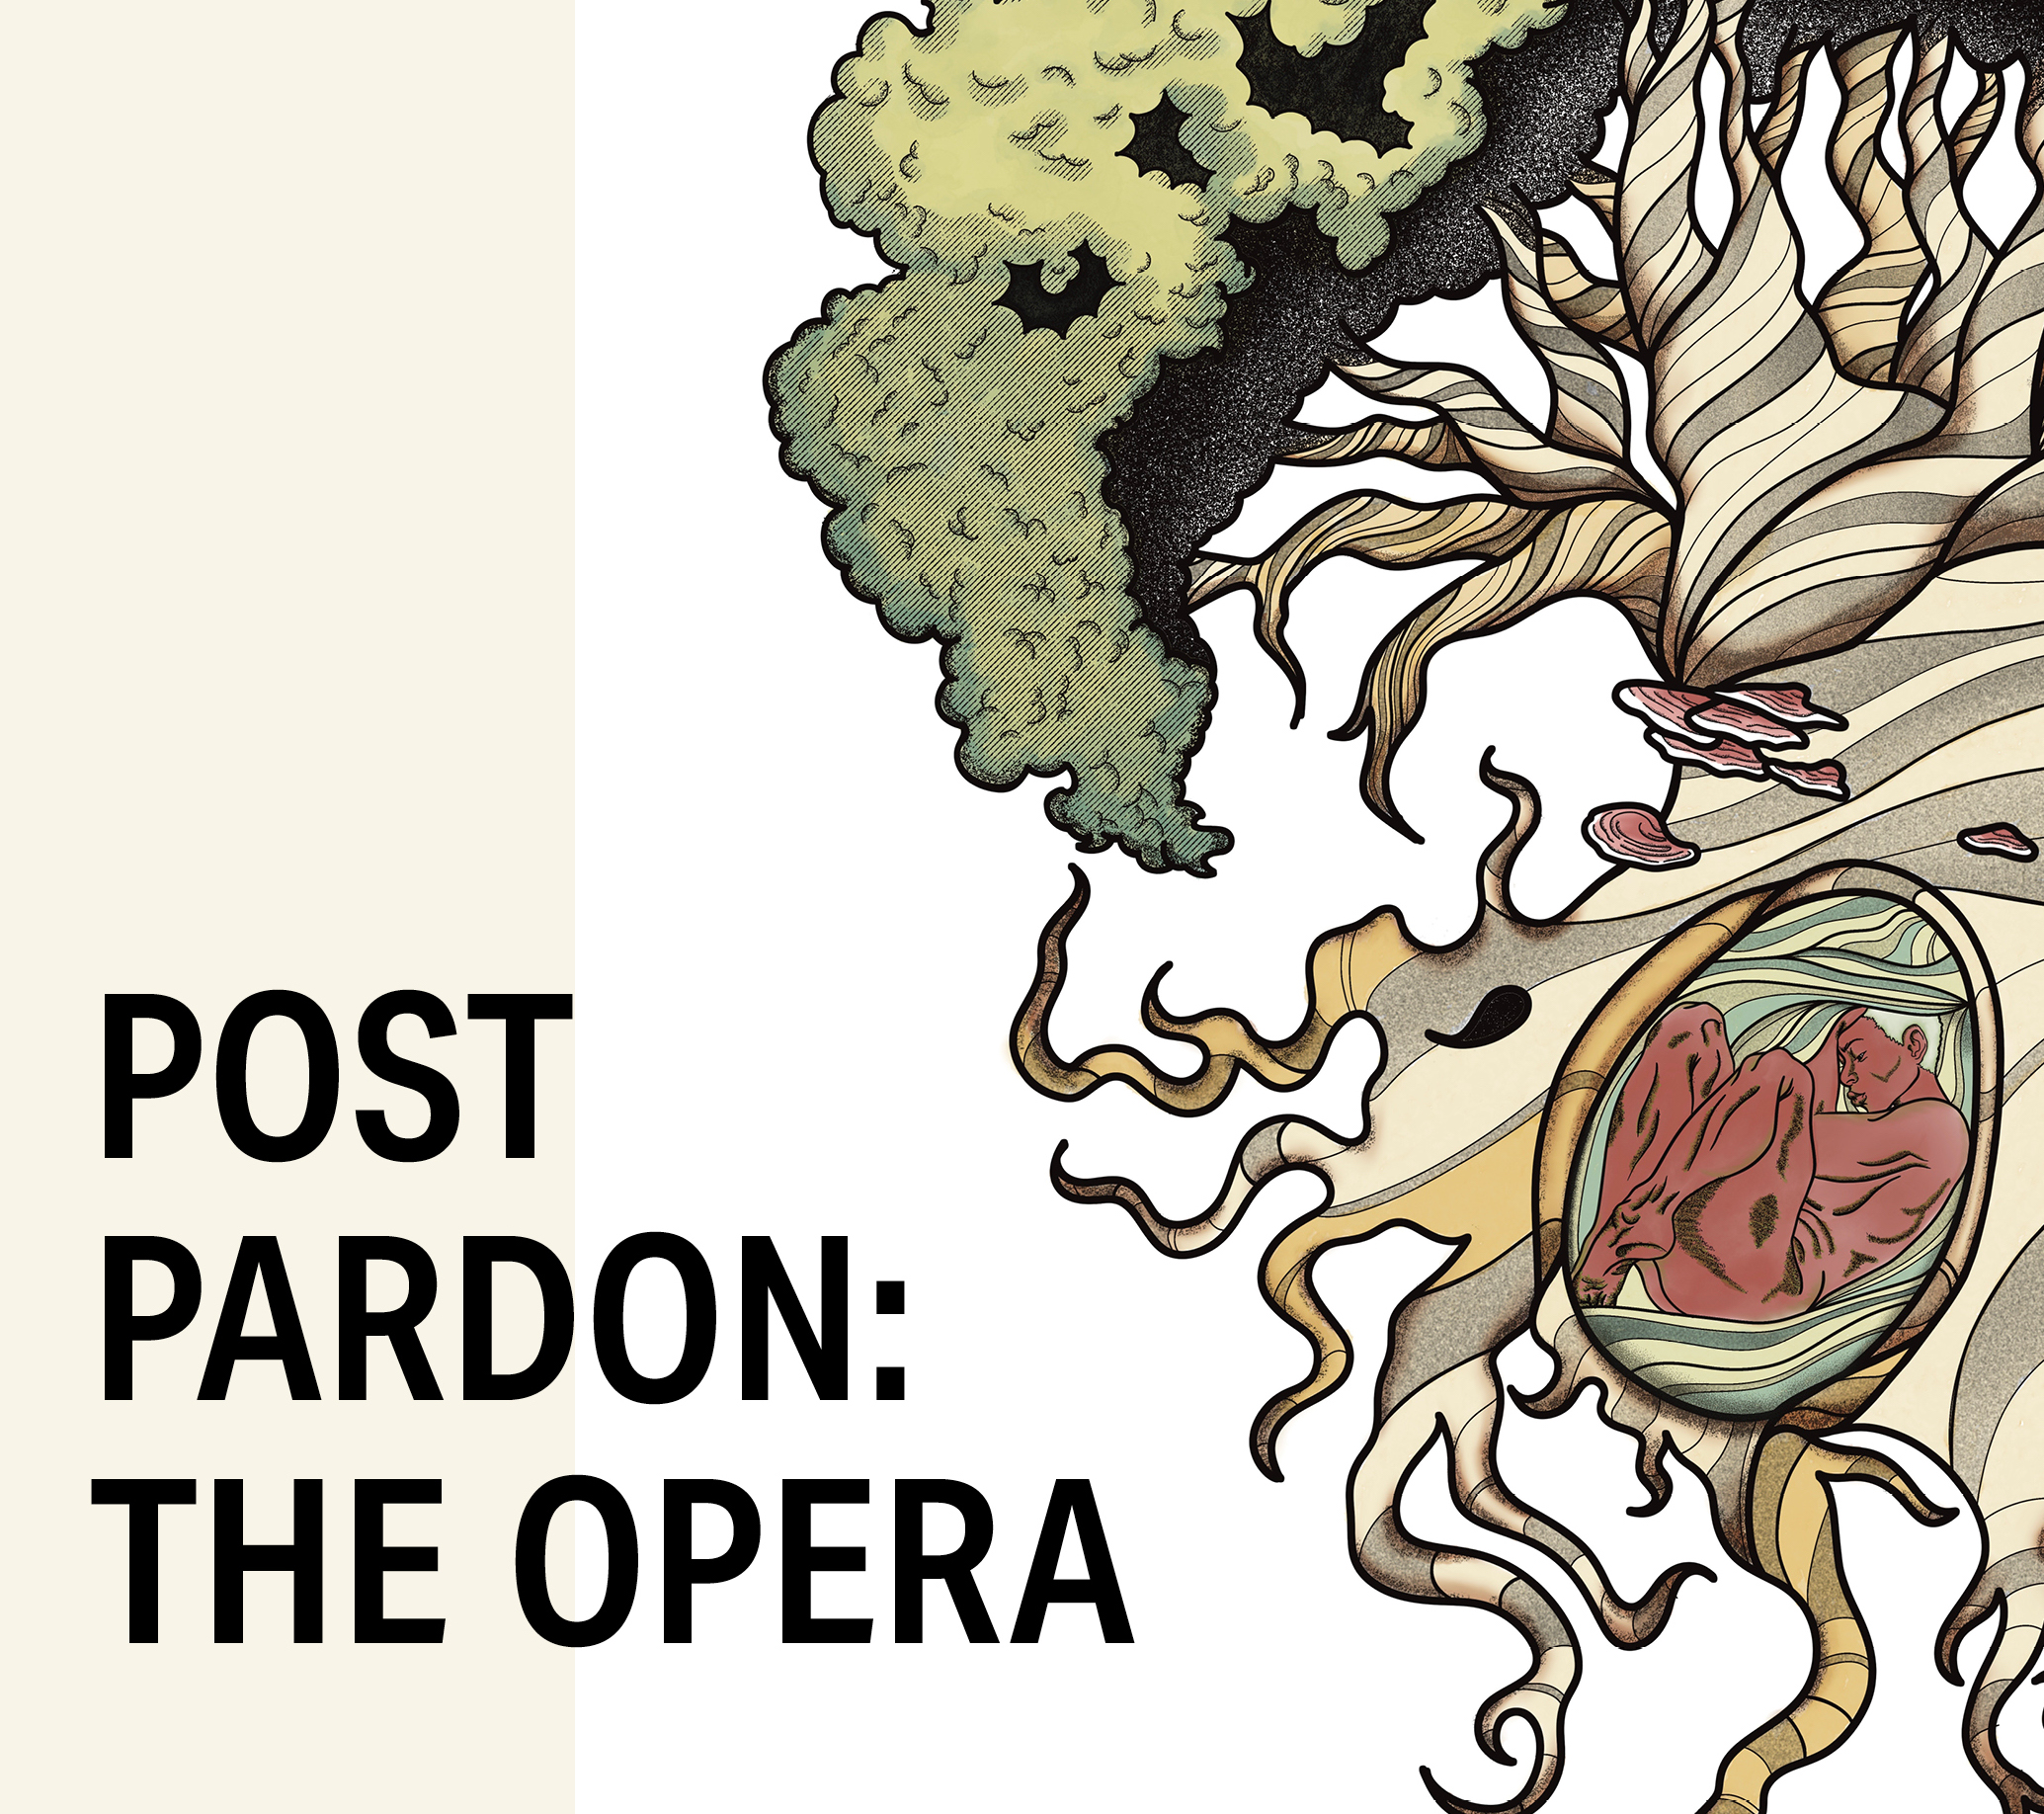 Post Pardon: The Opera | Librettist & Composer Talk (June 23) and Work-in-Progress Showing (June 30)